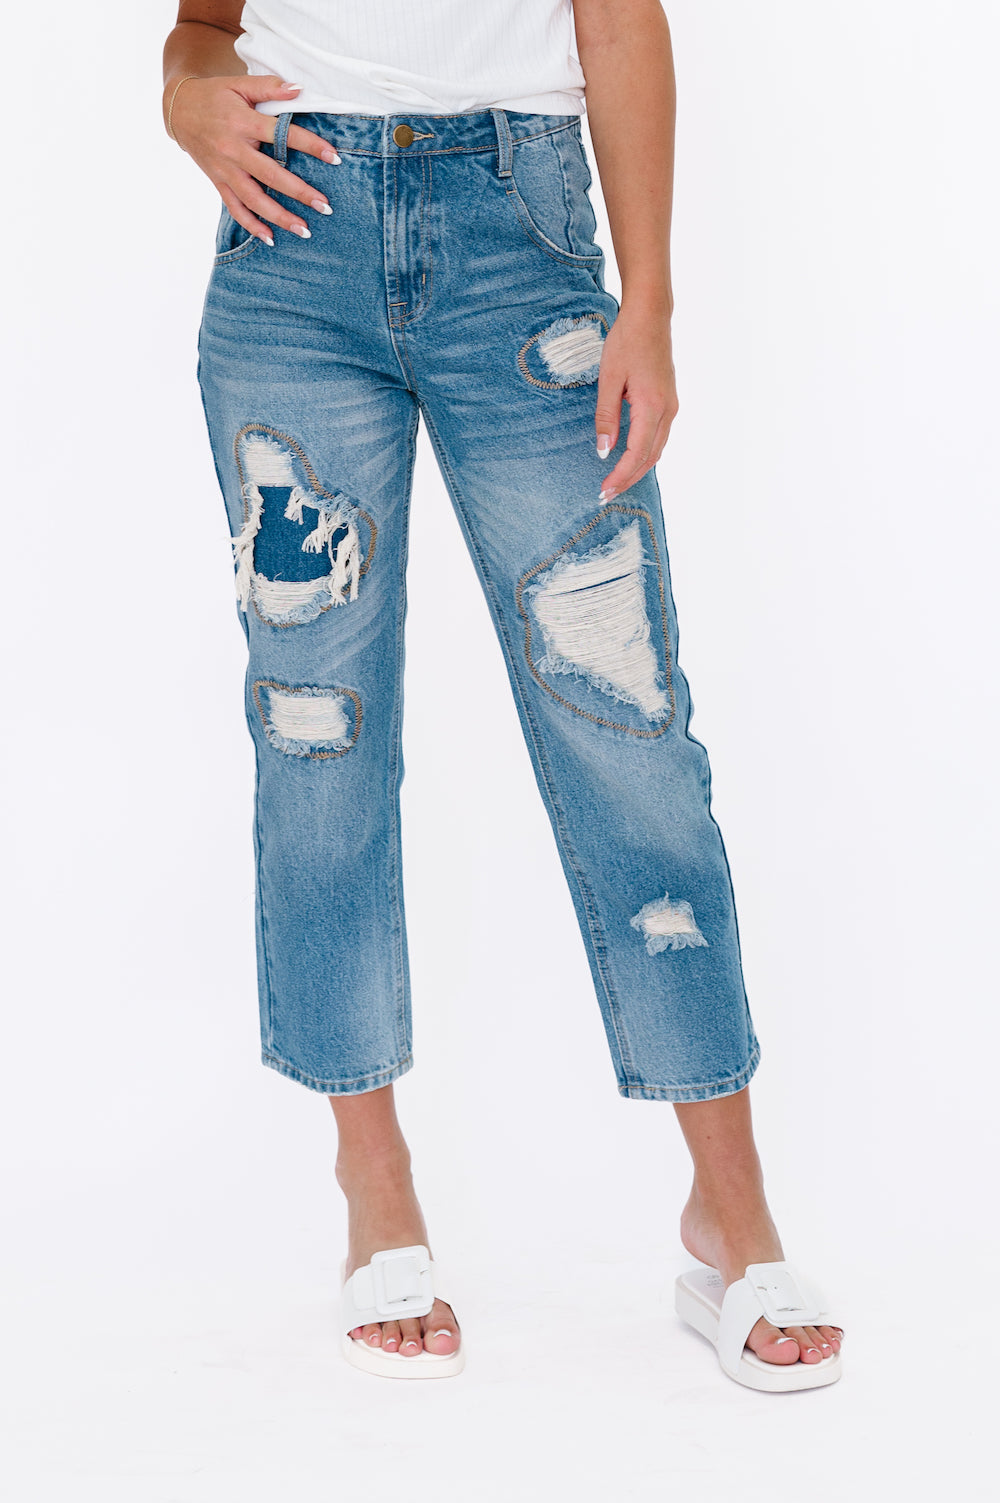 Cropped denim jeans